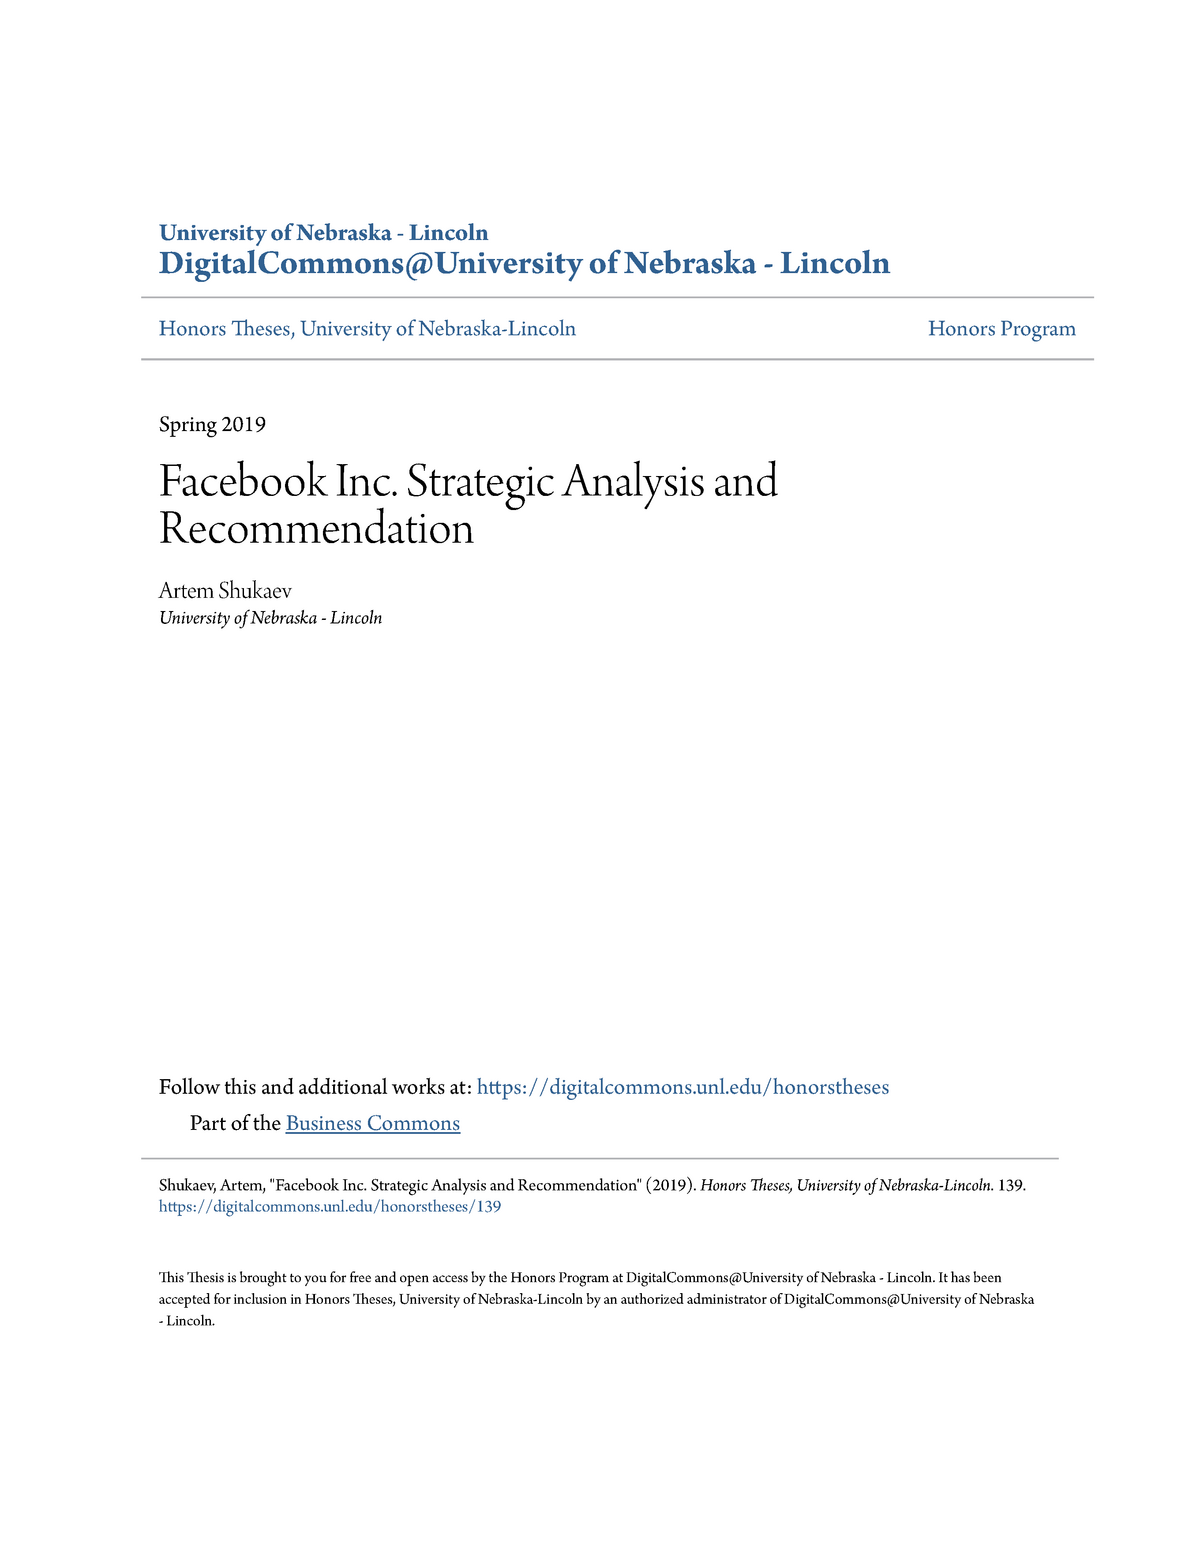 facebook case study analysis pdf